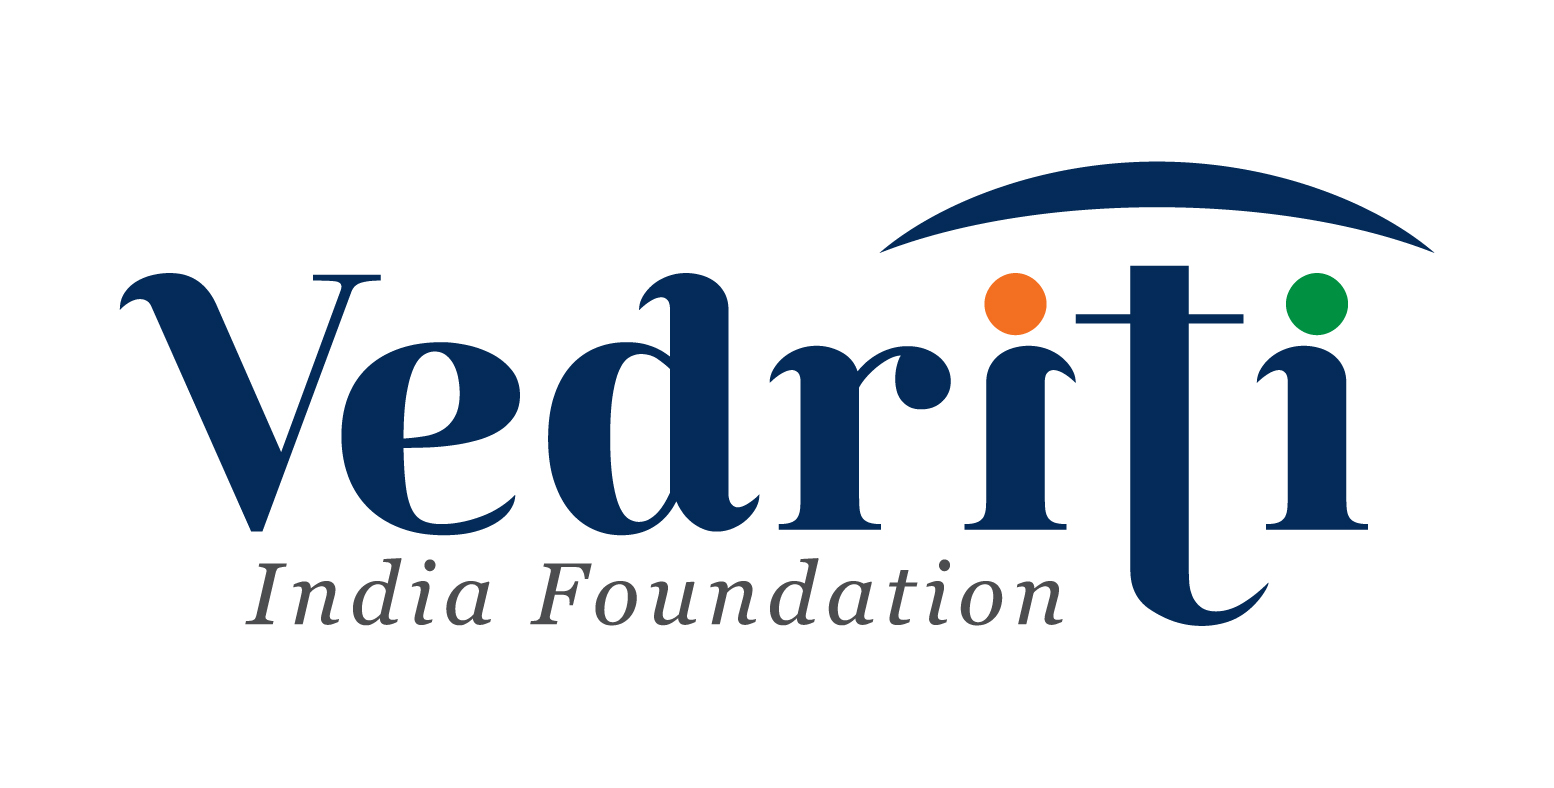 Vedriti India Foundation